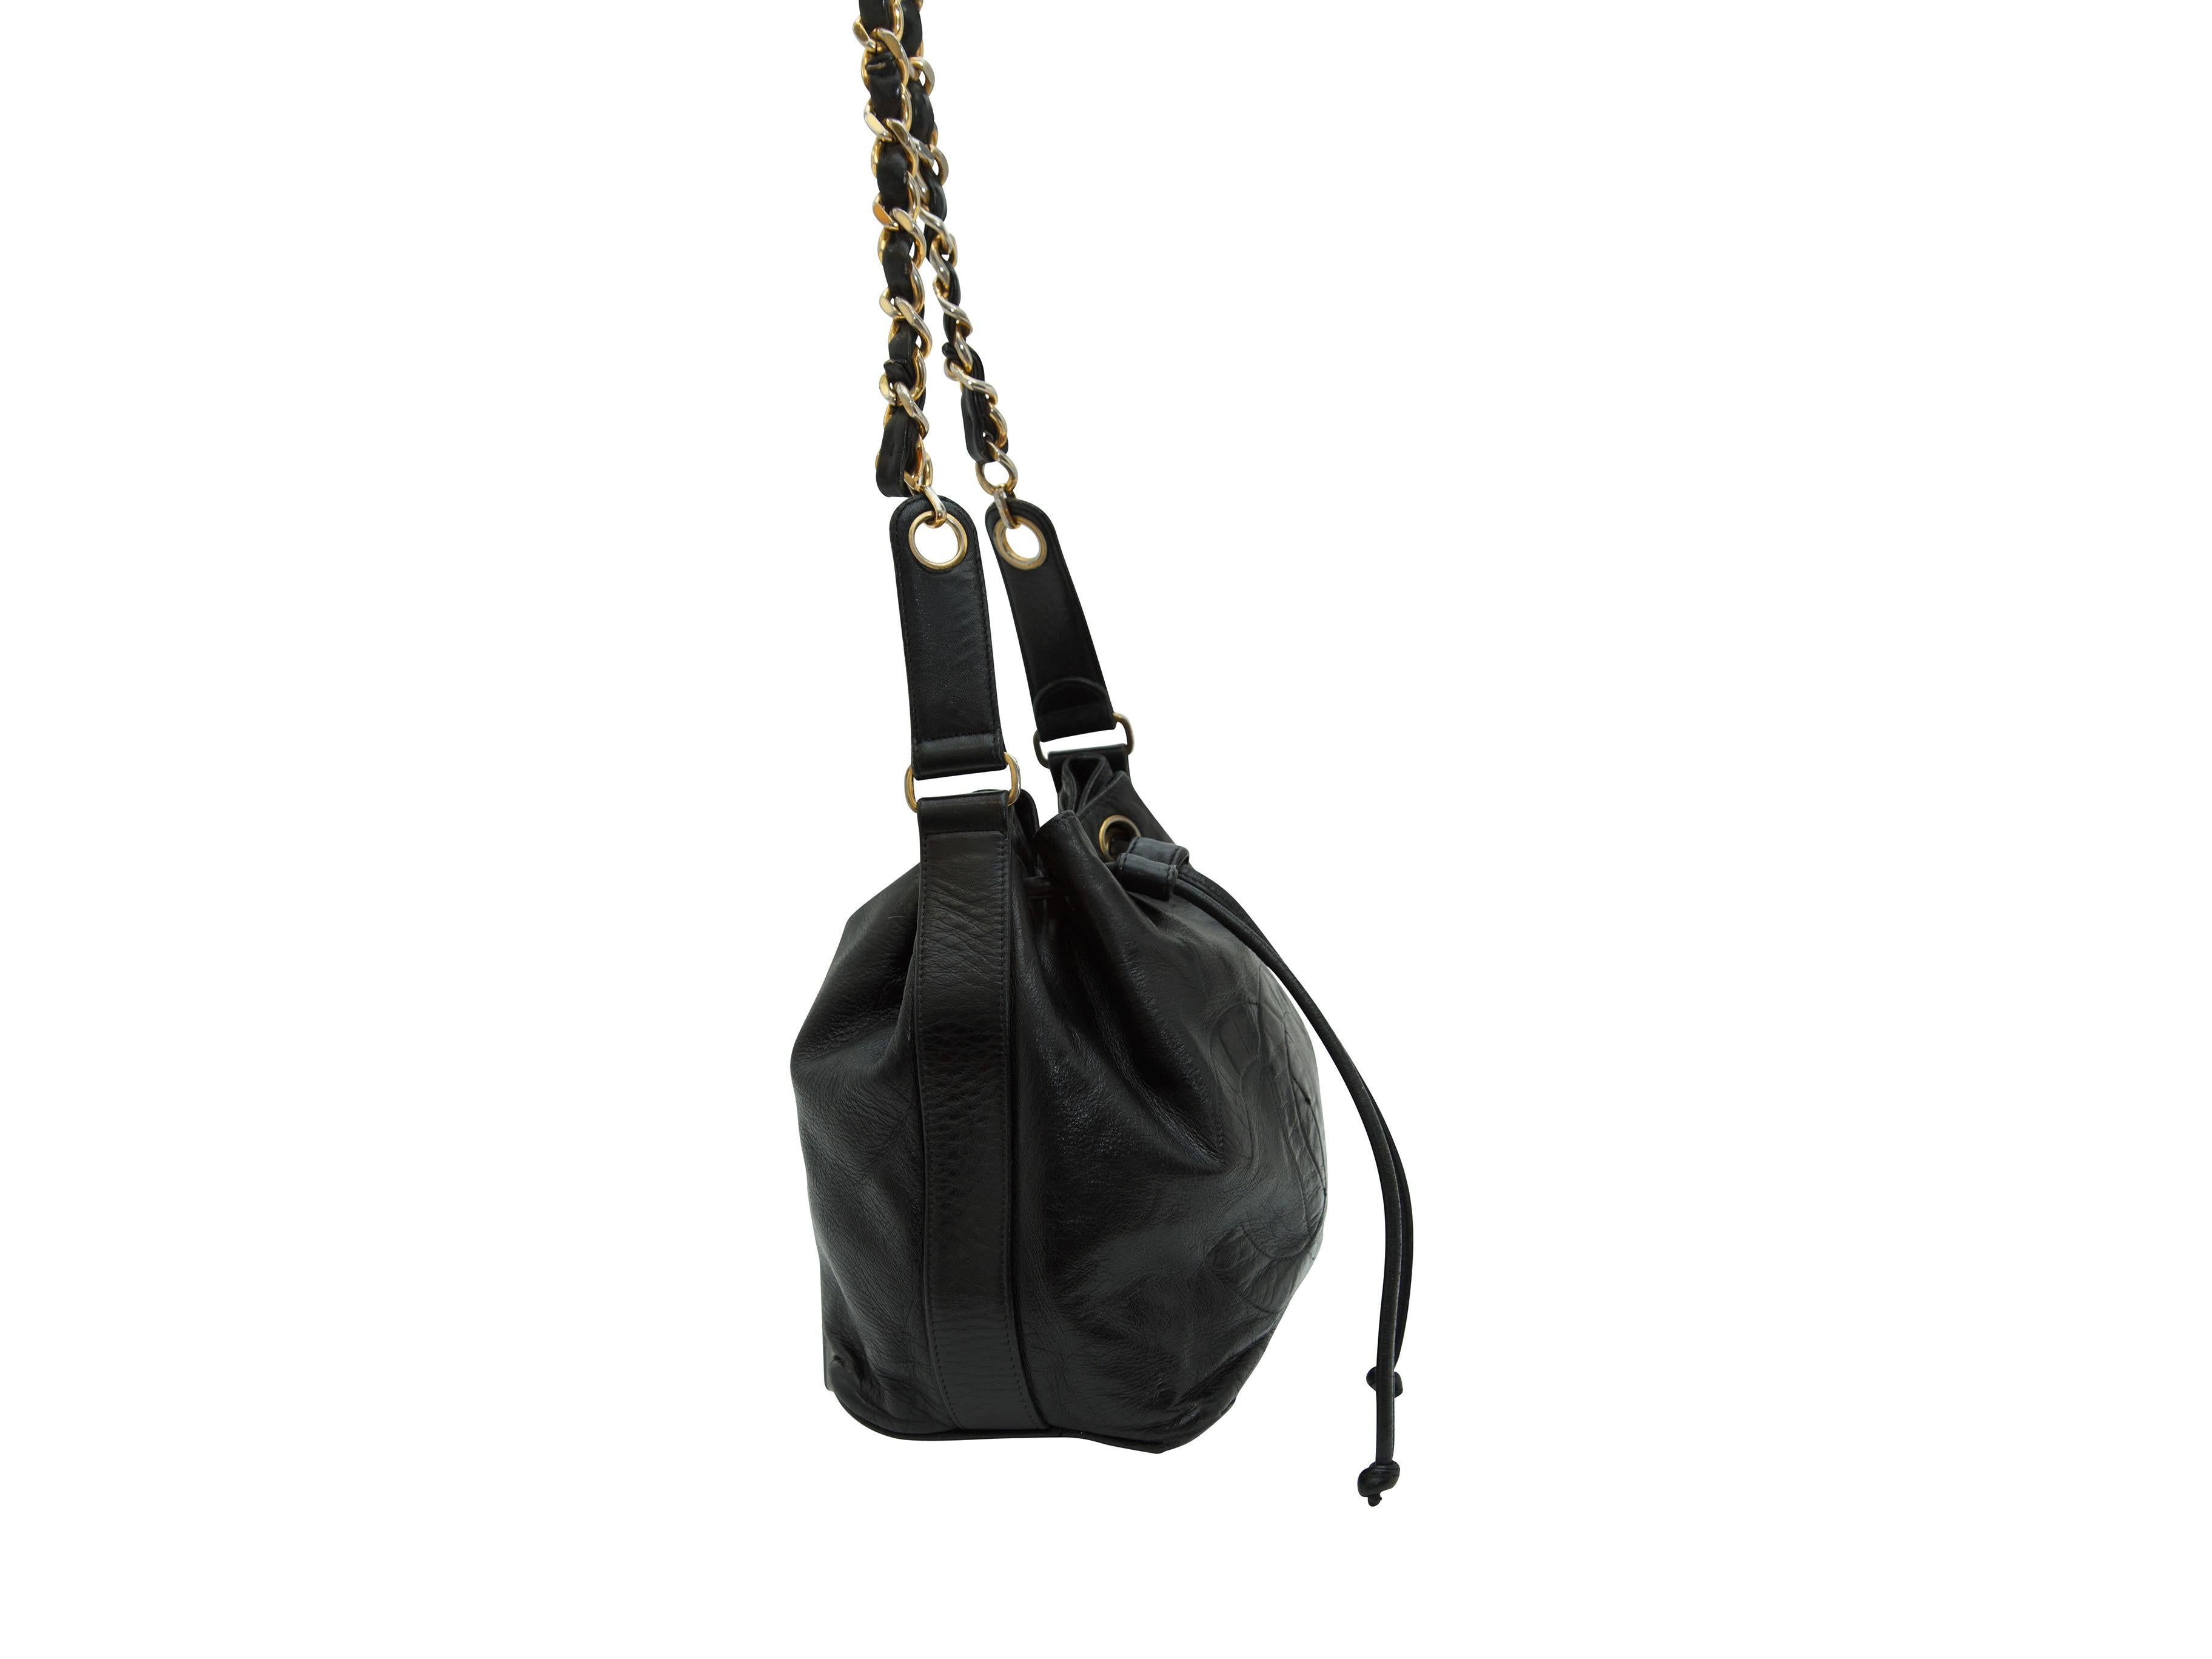 Chanel Black Leather Bucket Bag 2